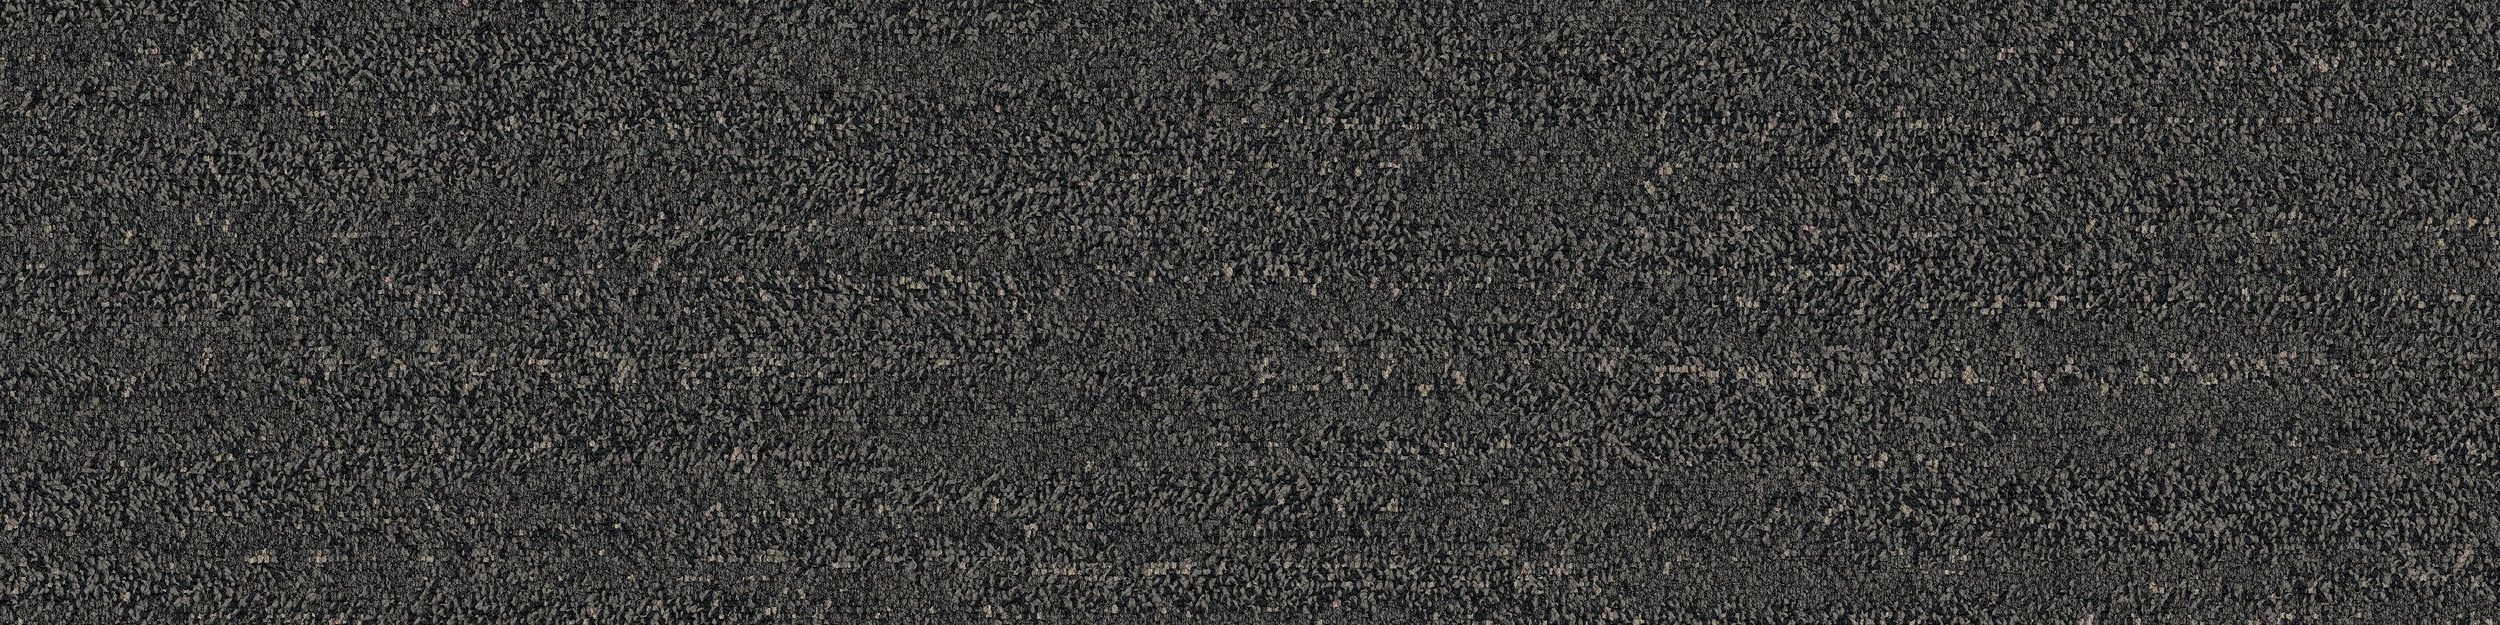 Rockland Road Carpet Tile In Charcoal Quarry image number 2